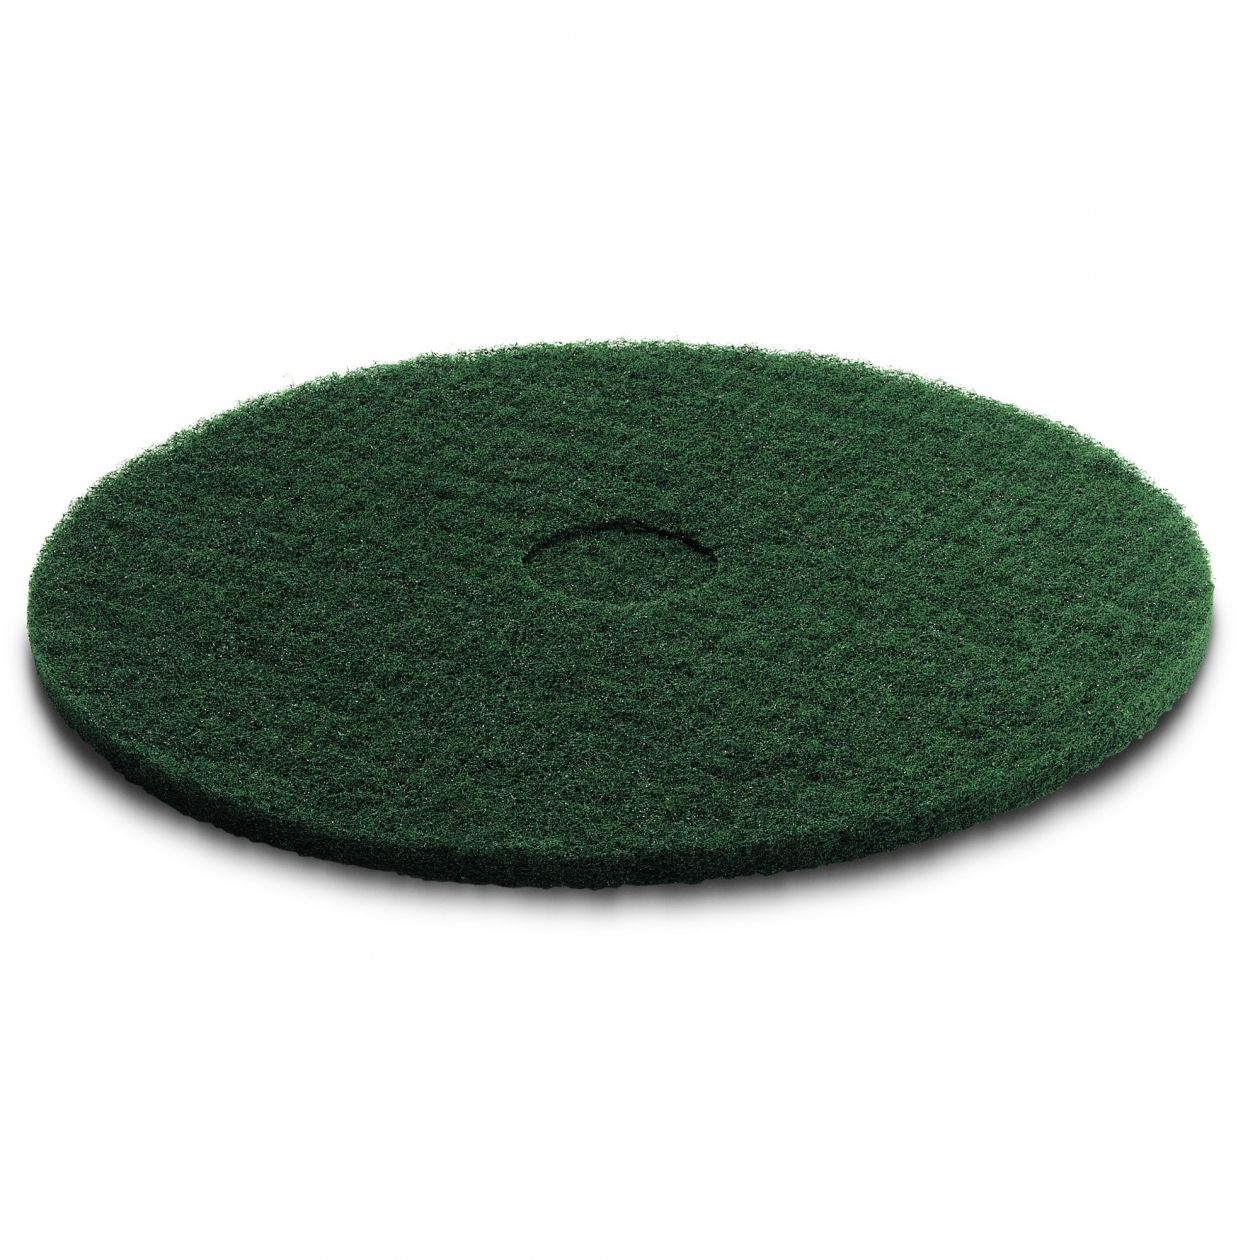 Пад, Karcher средне жесткий, зеленый, 356 mm